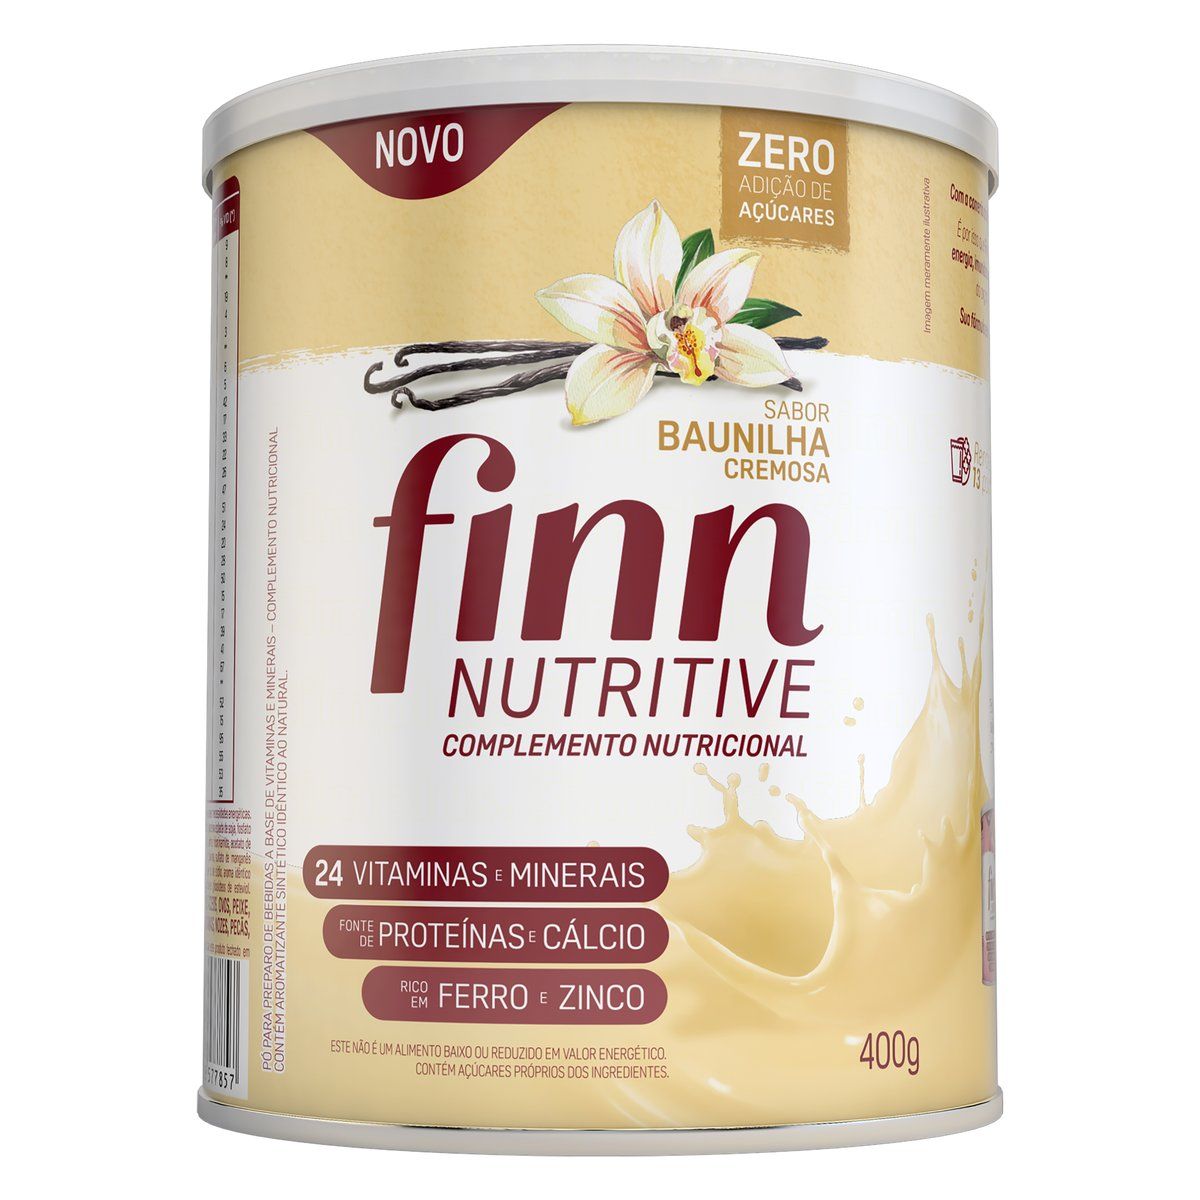 Complemento Nutricional Baunilha Cremosa Finn Nutritive Lata 400g